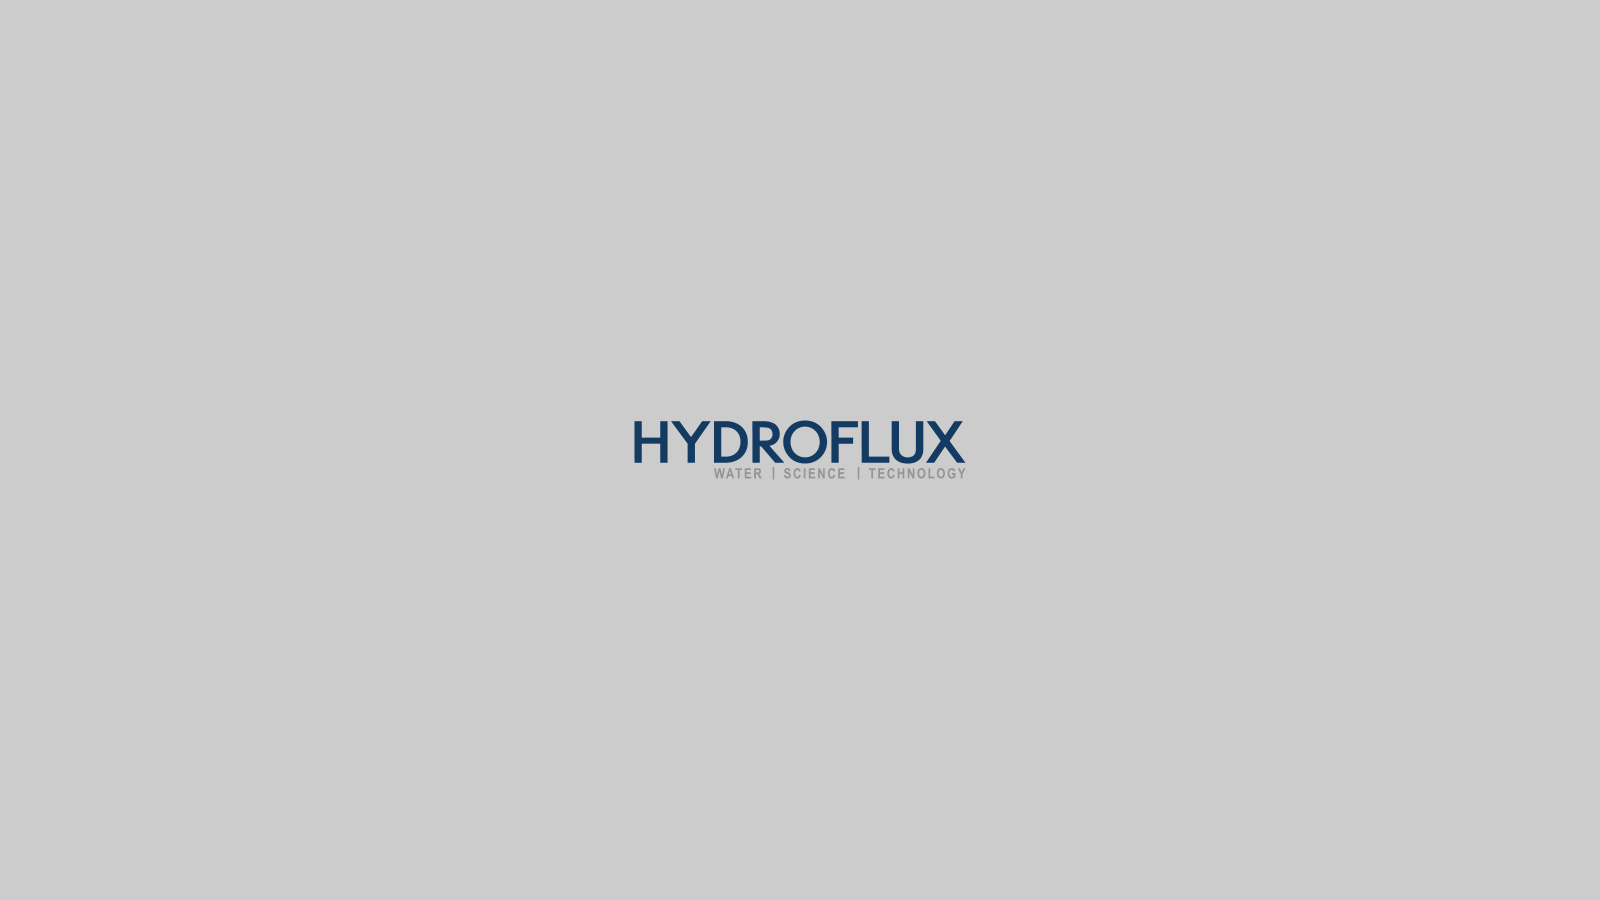 Hydroflux